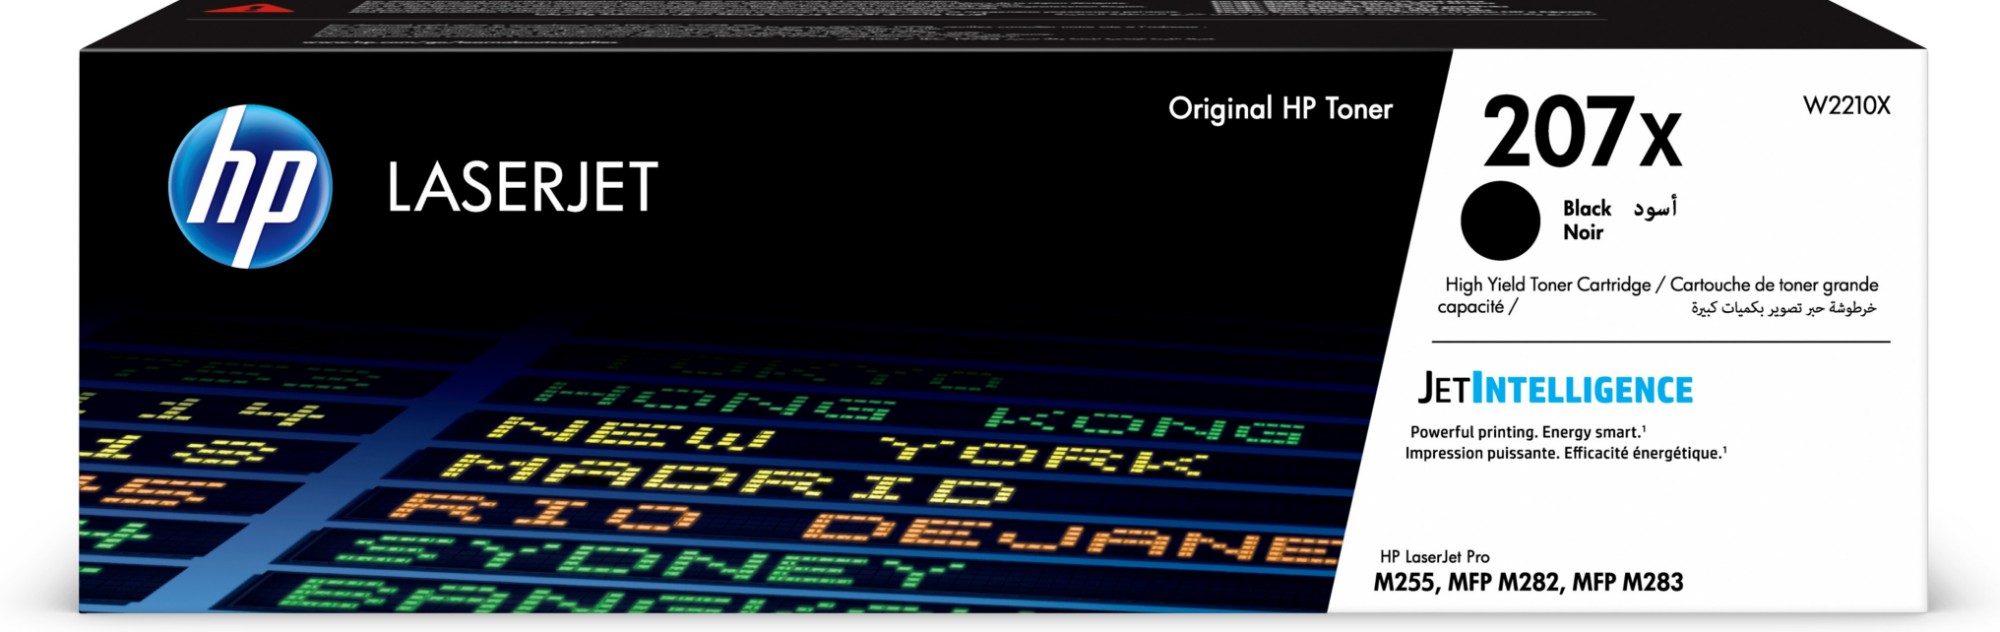 Original HP 207X Black High Capacity Toner Cartridge W2210X